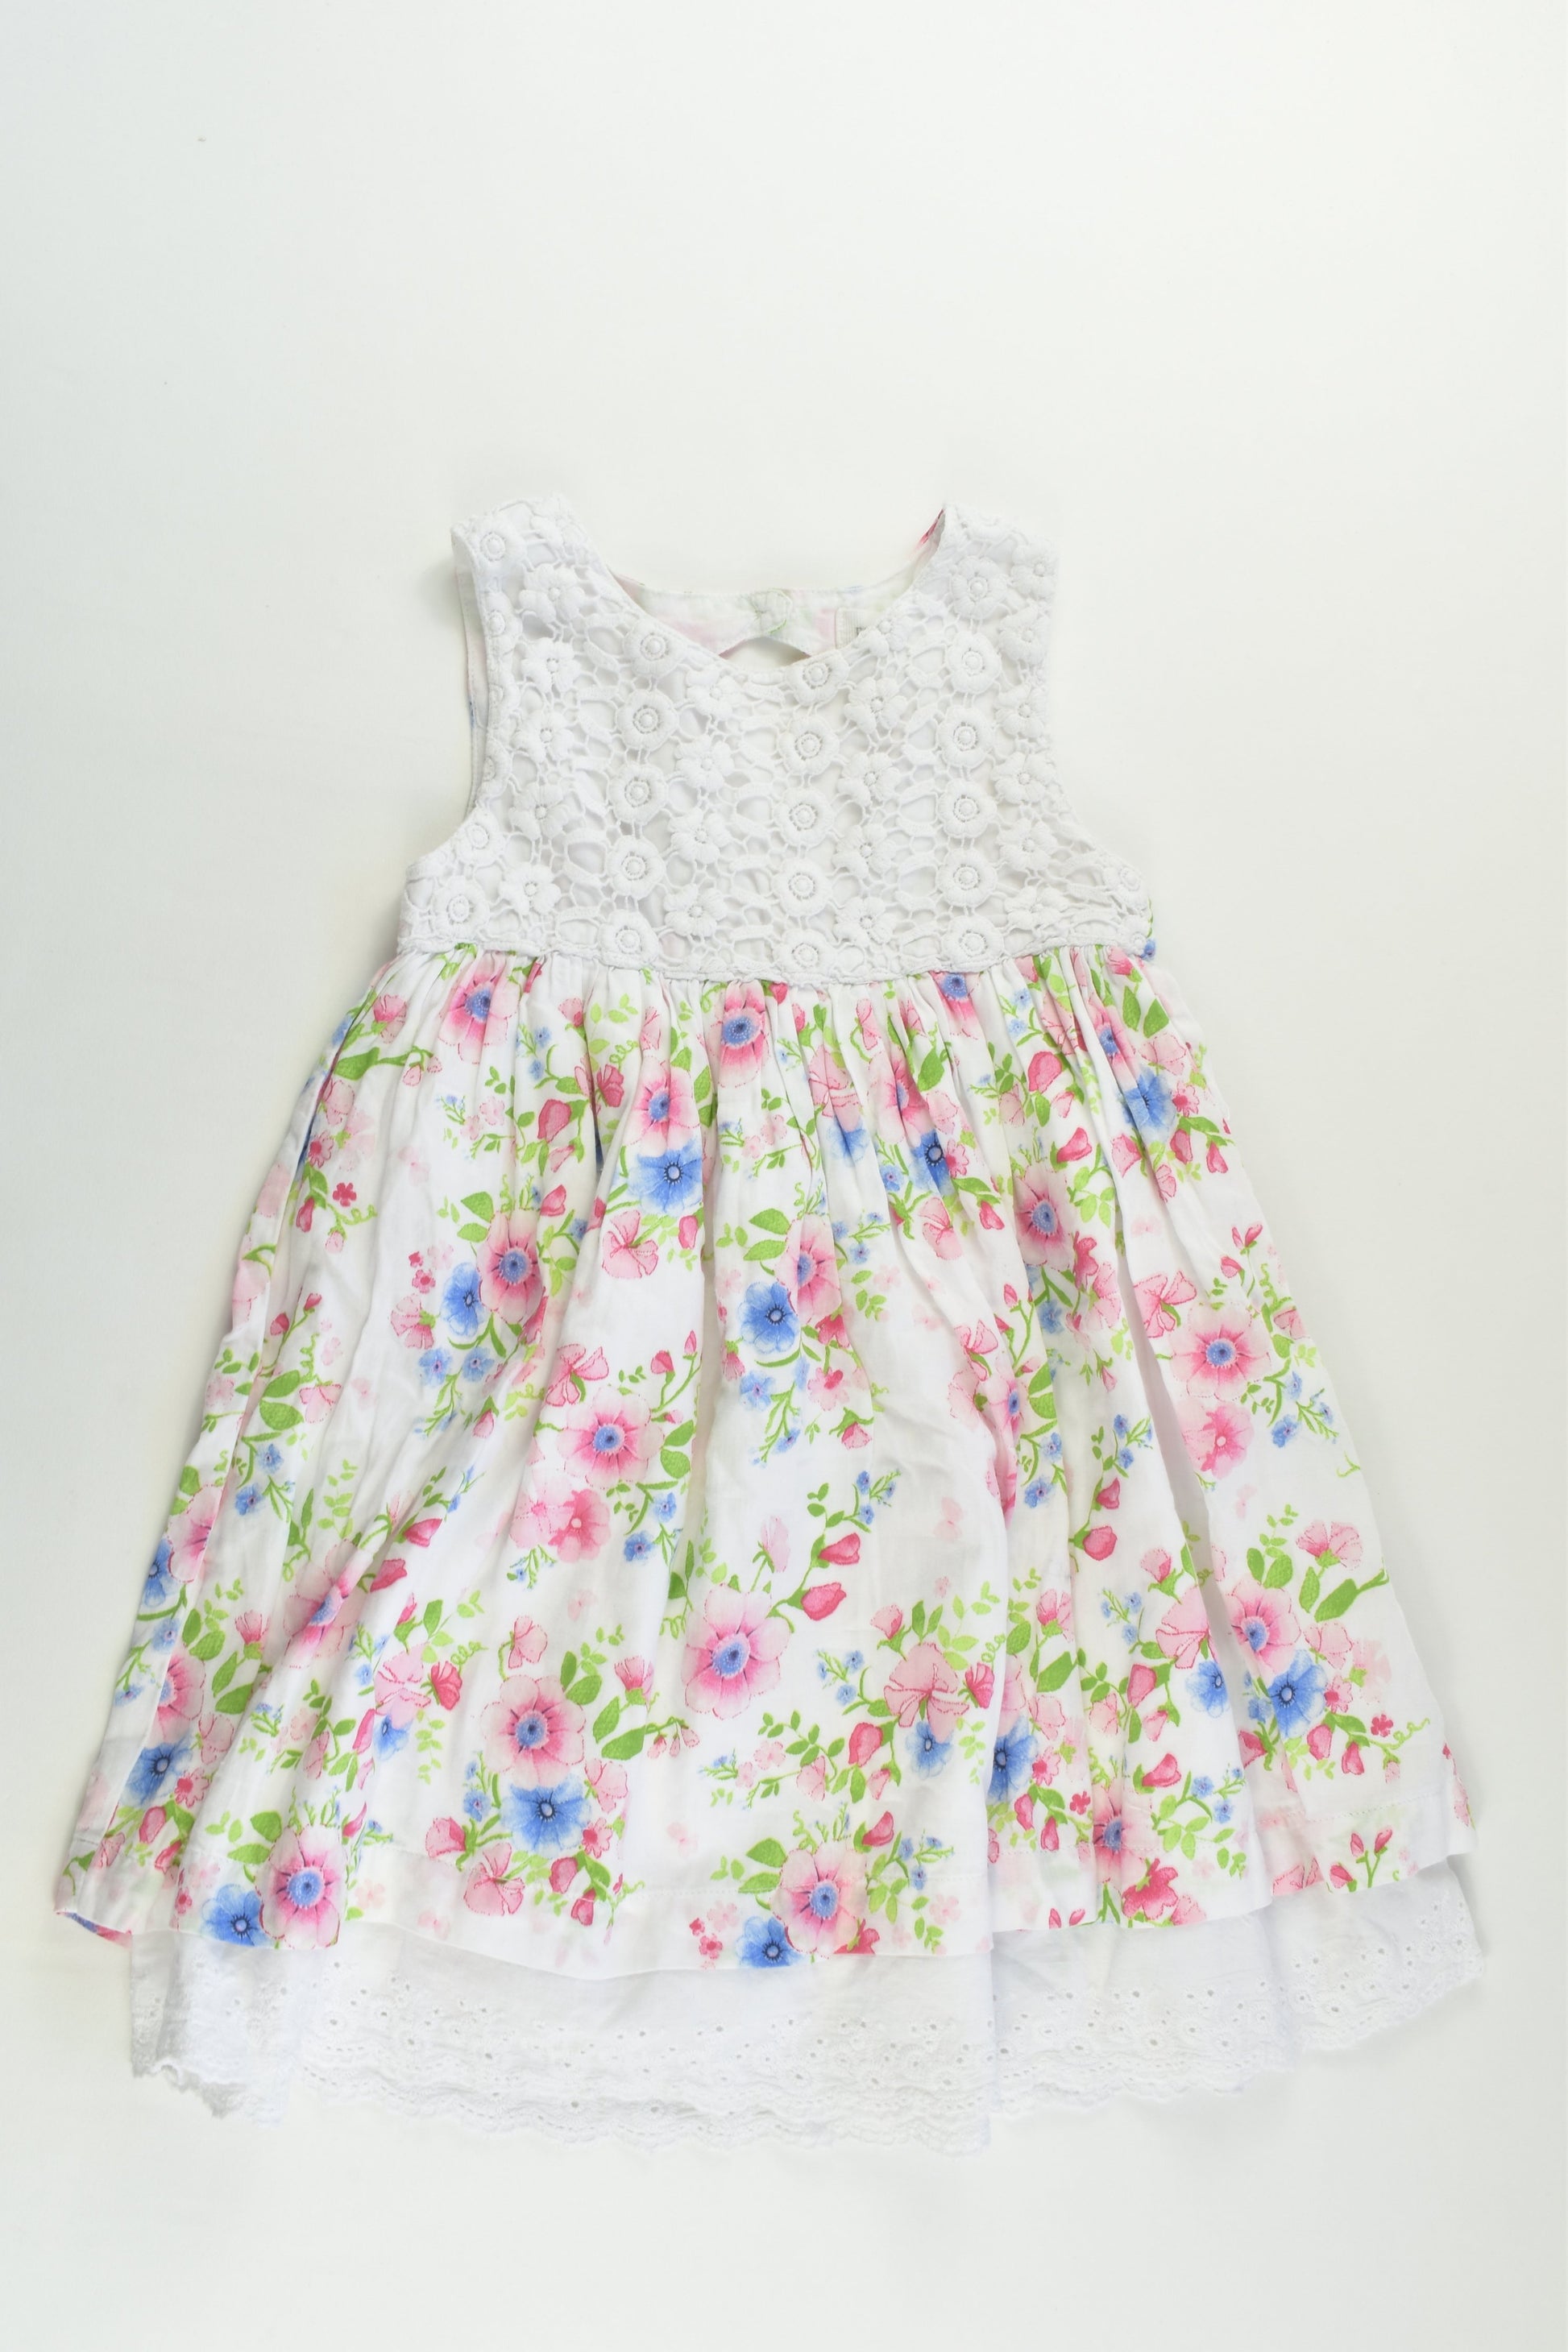 Pumpkin Patch Size 1 (12-18 months) Lined Floral Dress with Lace Details